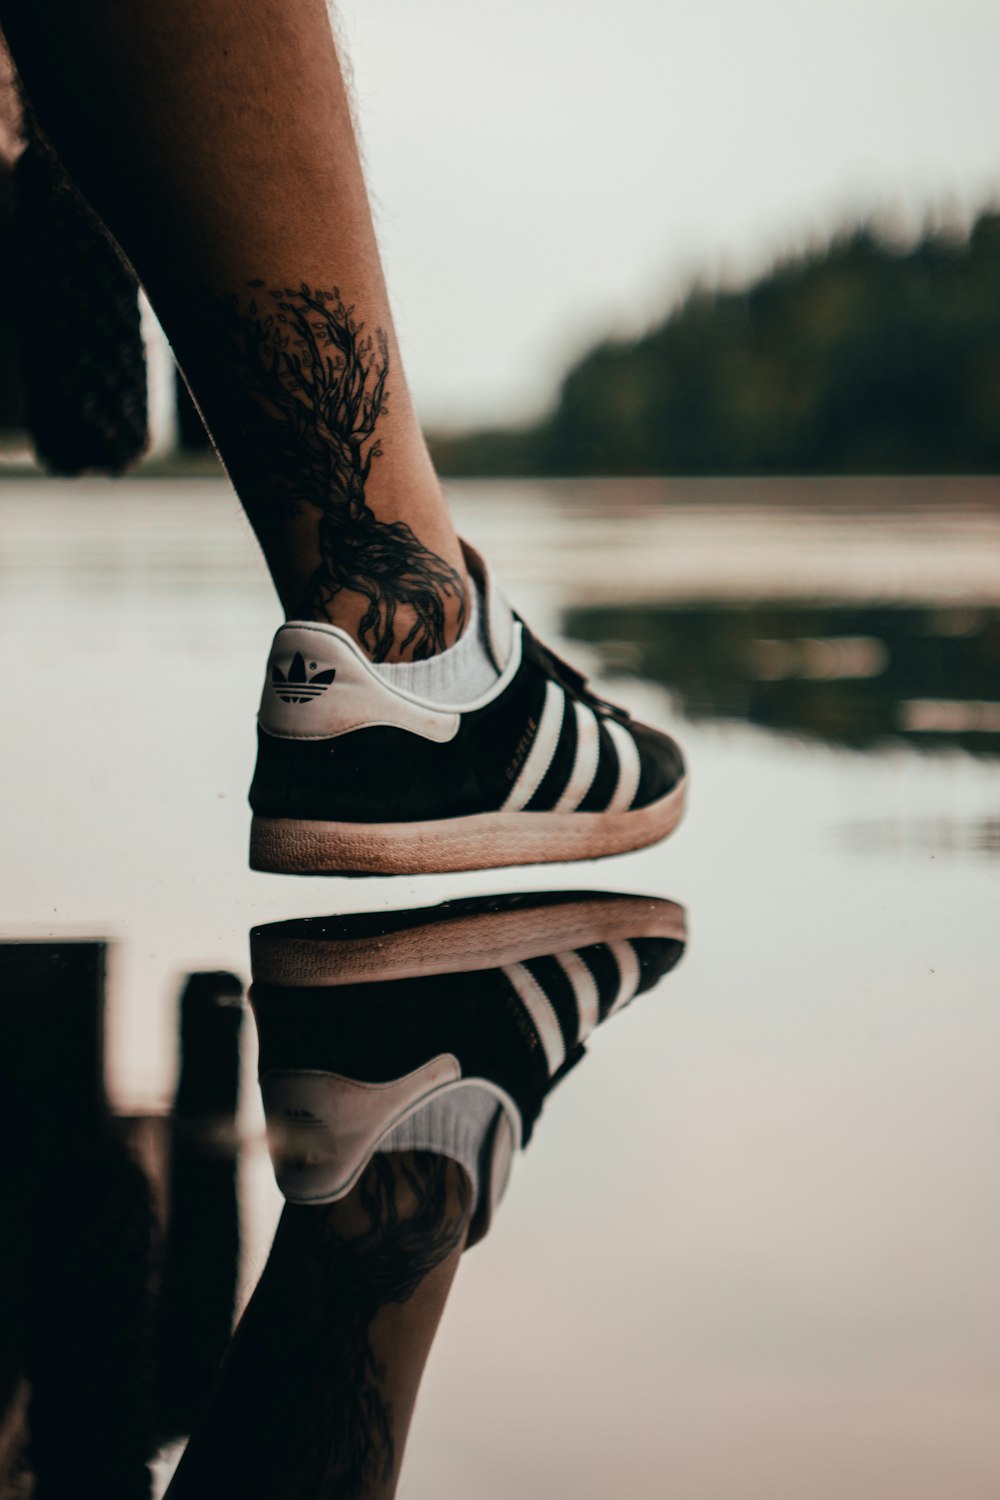 black Adidas low-top sneaker photo – Free Leg Image on Unsplash